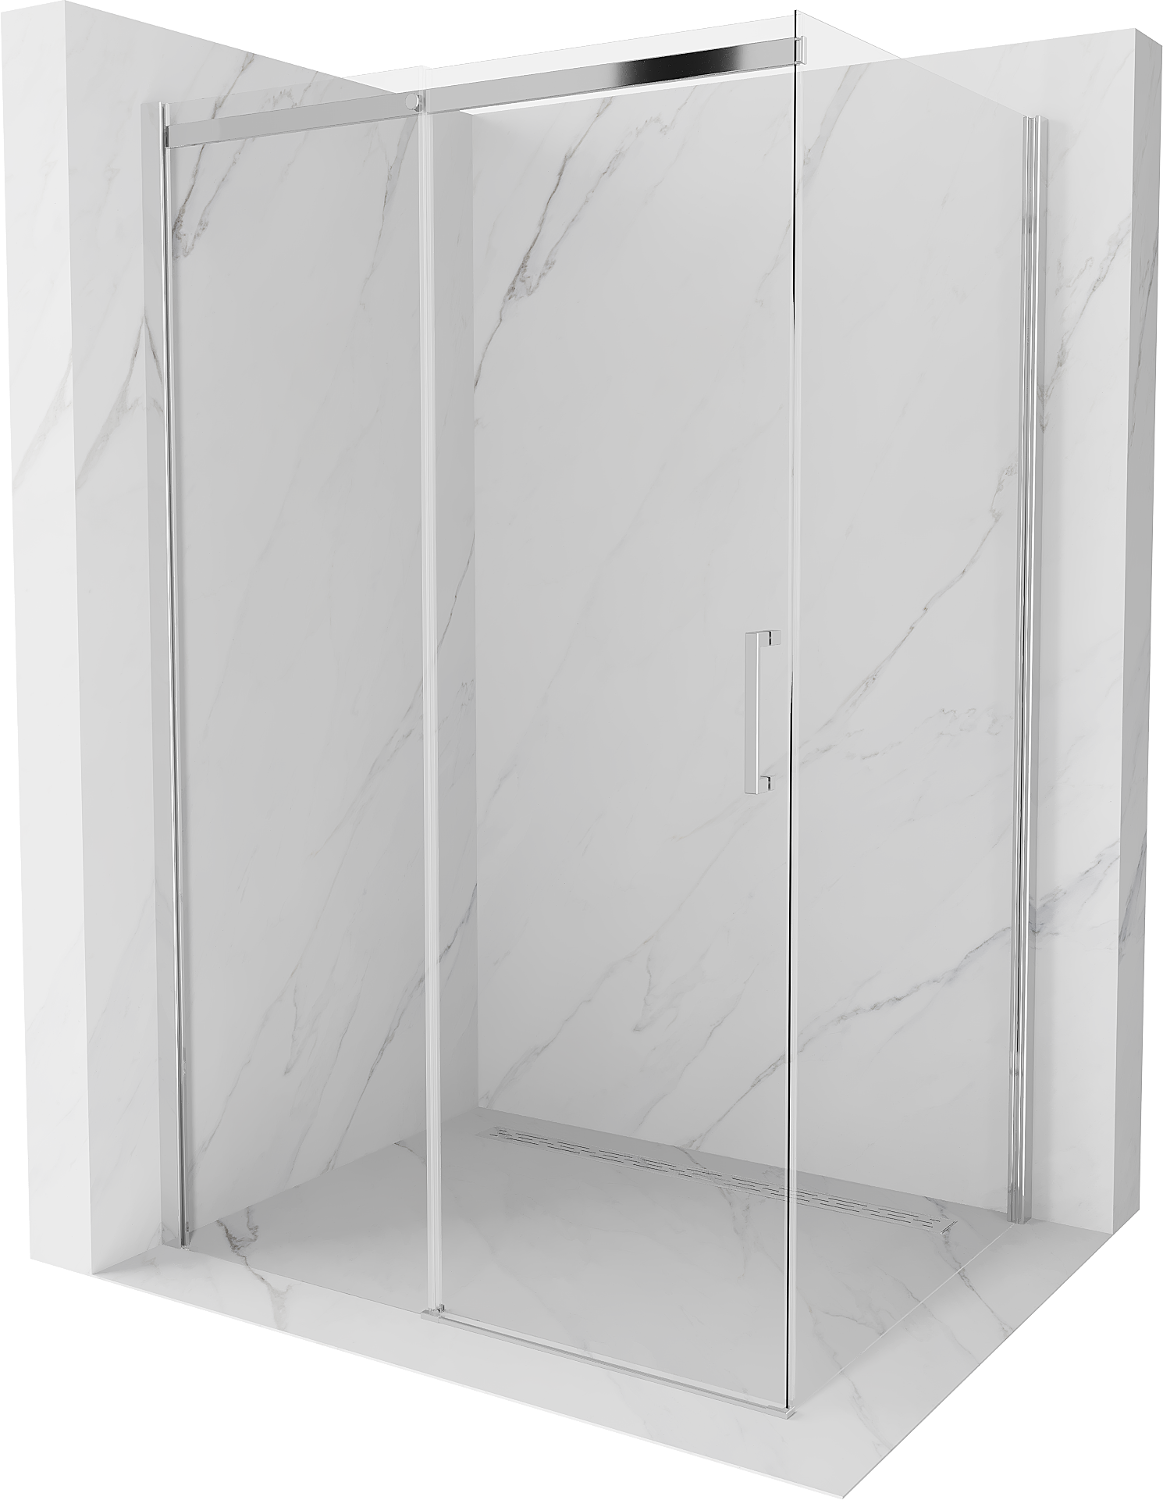 Mexen Omega kabina prysznicowa rozsuwana 100 x 70 cm, transparent, chrom - 825-100-070-01-00